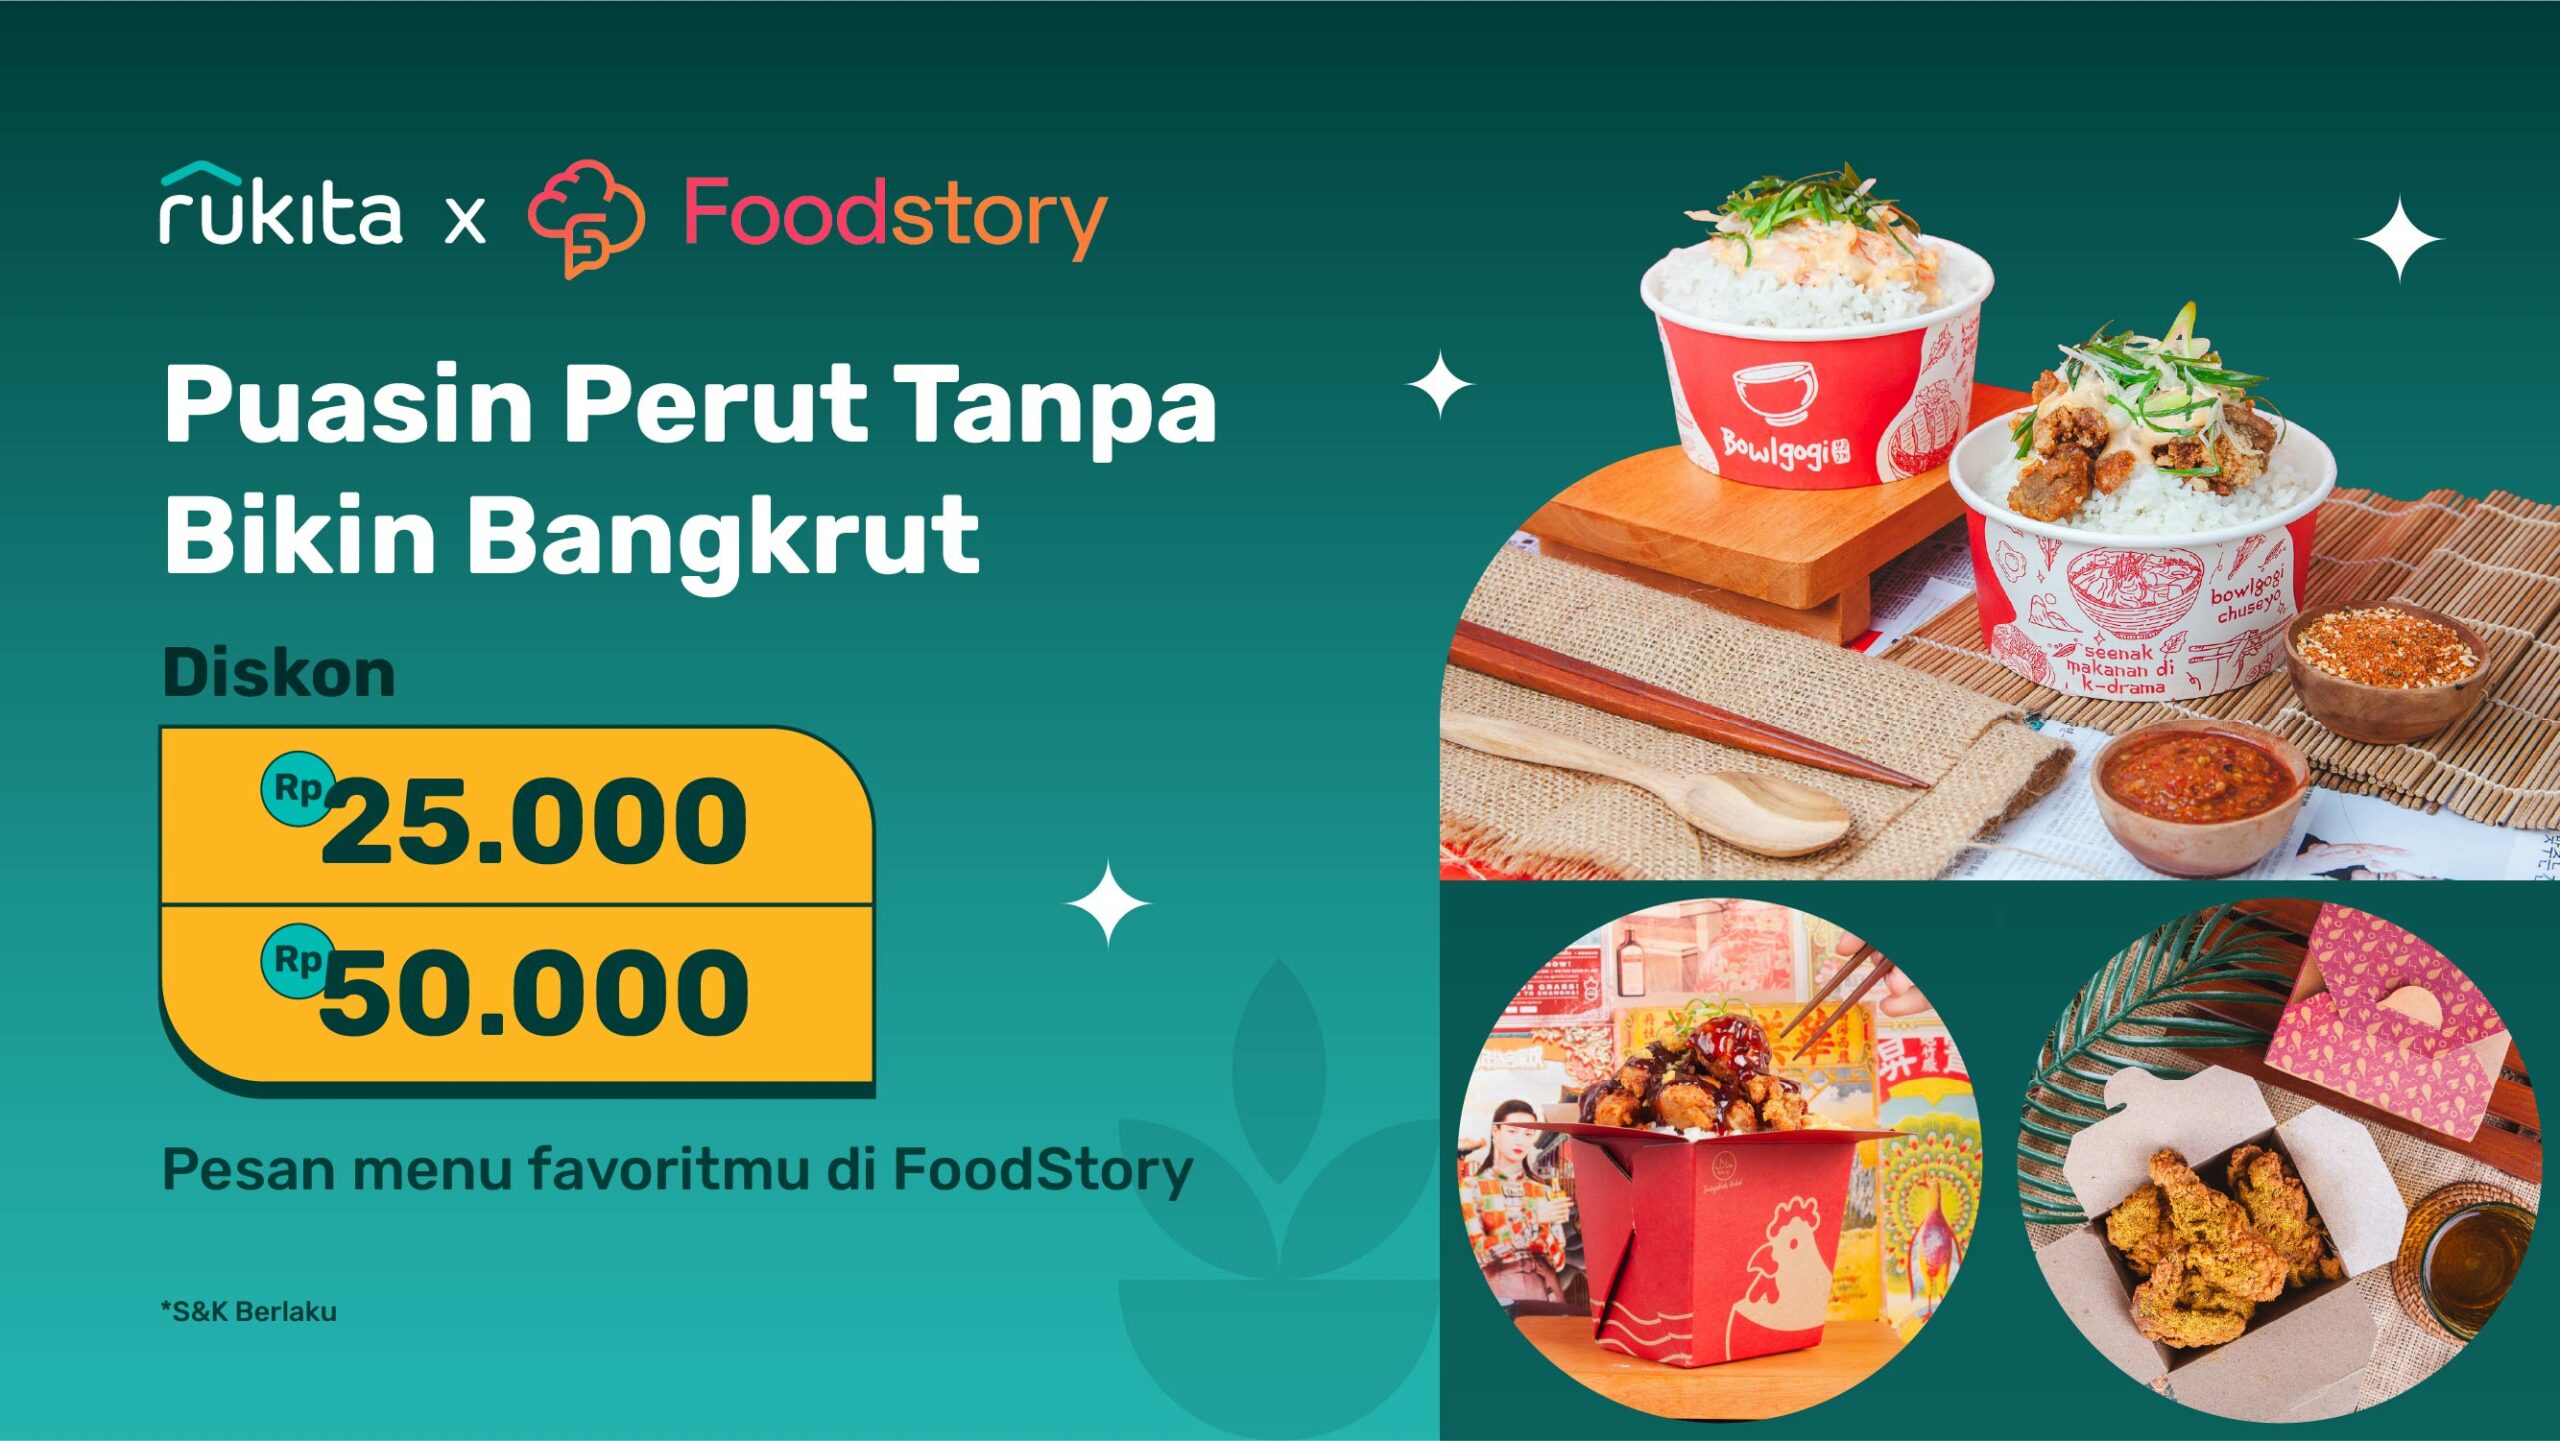 Rukita x Foodstory: Promo Double Nikmat, Makan Enak Bayar Setengah Harga